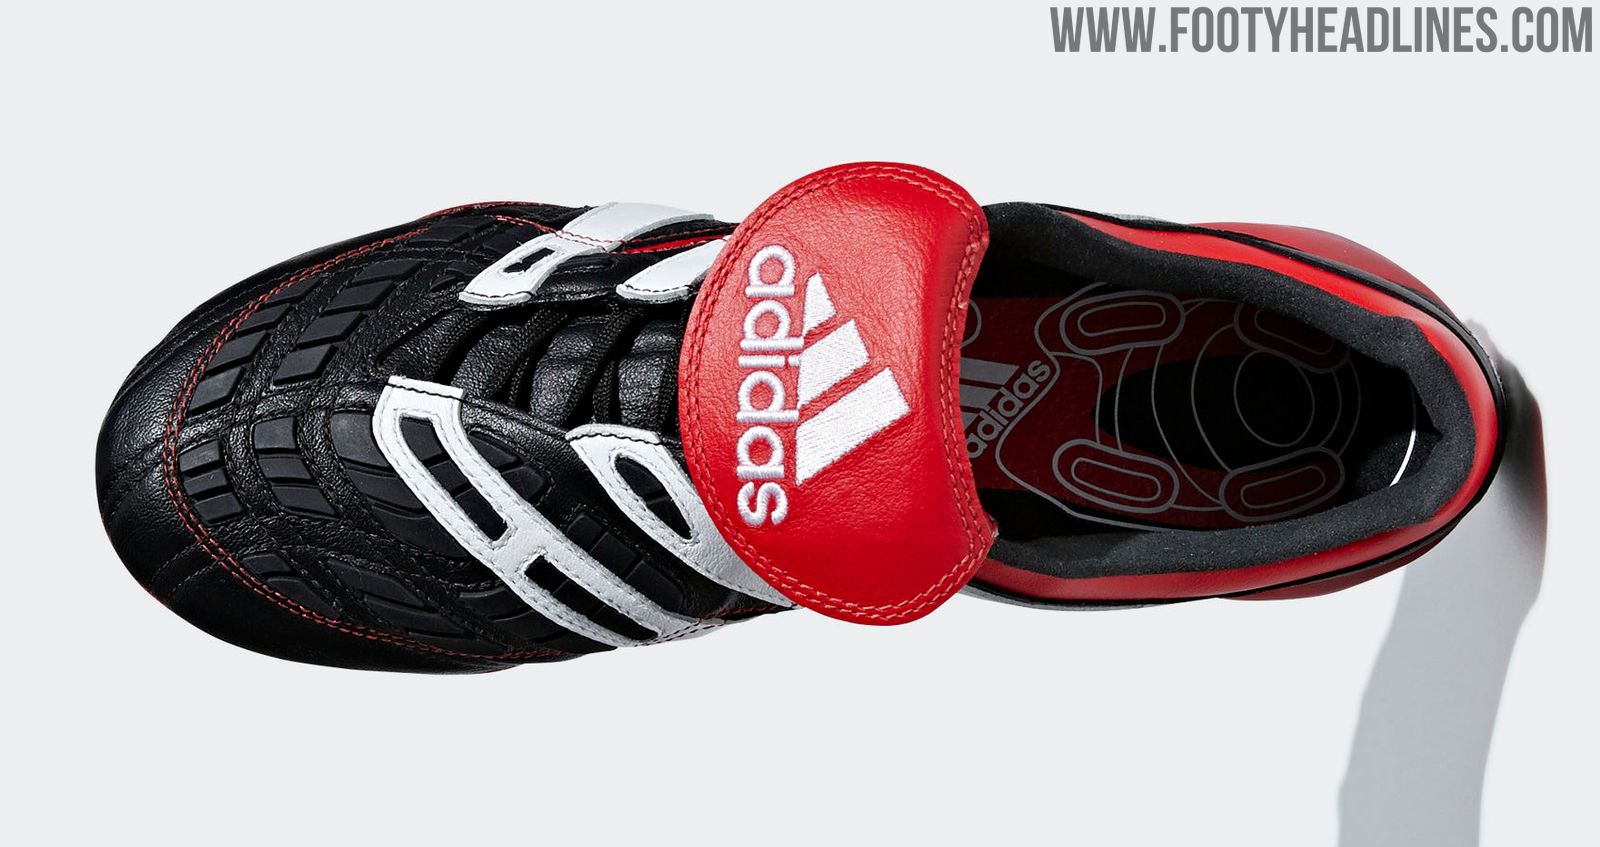 Black / White / Red Adidas Predator Accelerator 2018 Remake Boots ...